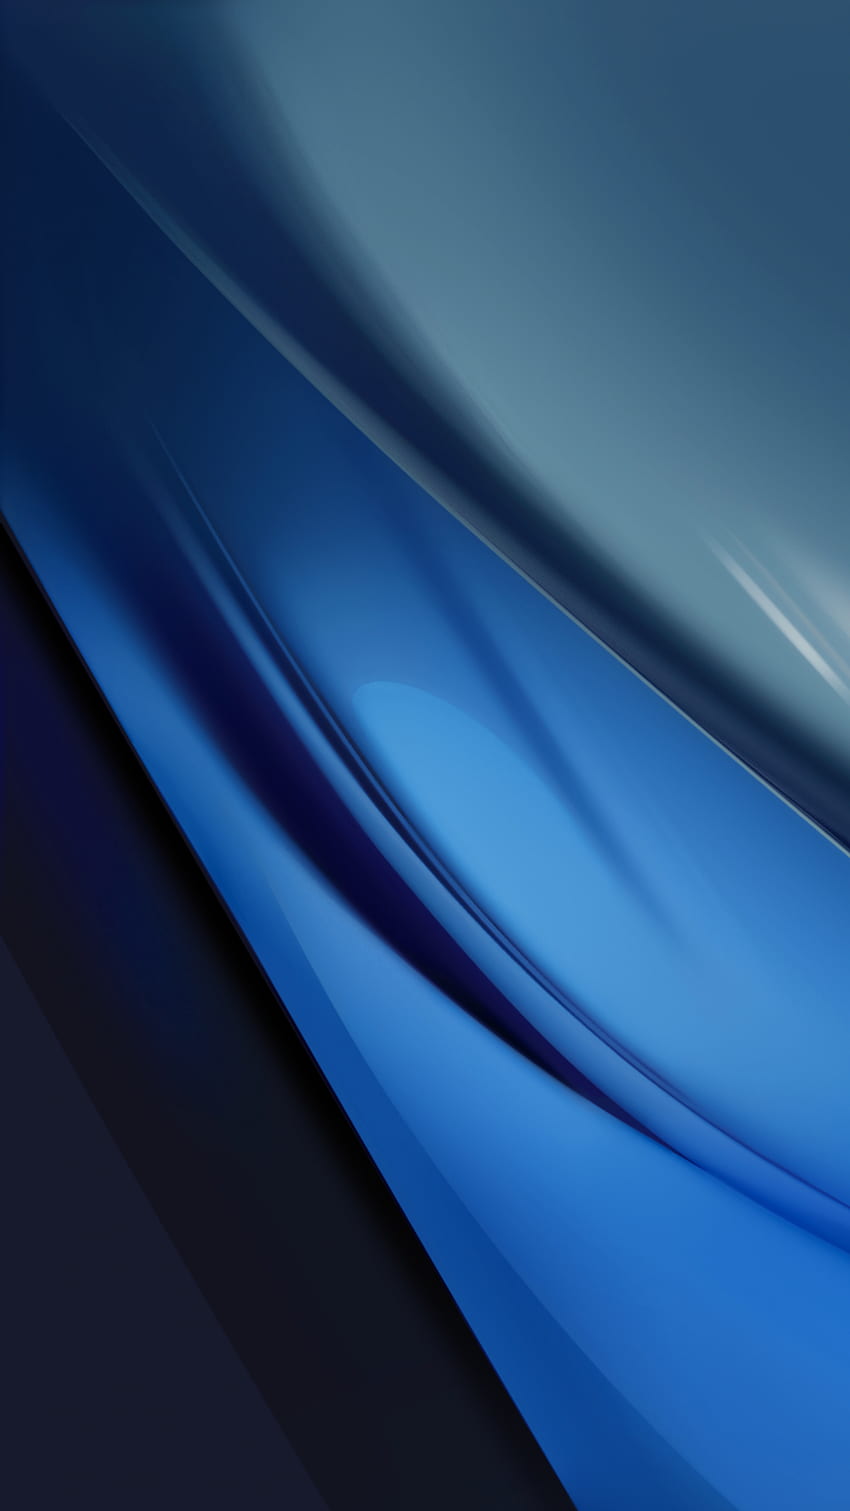 fddsfs, デジタル, 波, エレクトリック ブルー, 新しい, 影, テクスチャ, 黒, パターン, シェード, 抽象, 色合い, 曲線, 青, 素材, デザイン, , ライン, 滑らかな HD電話の壁紙